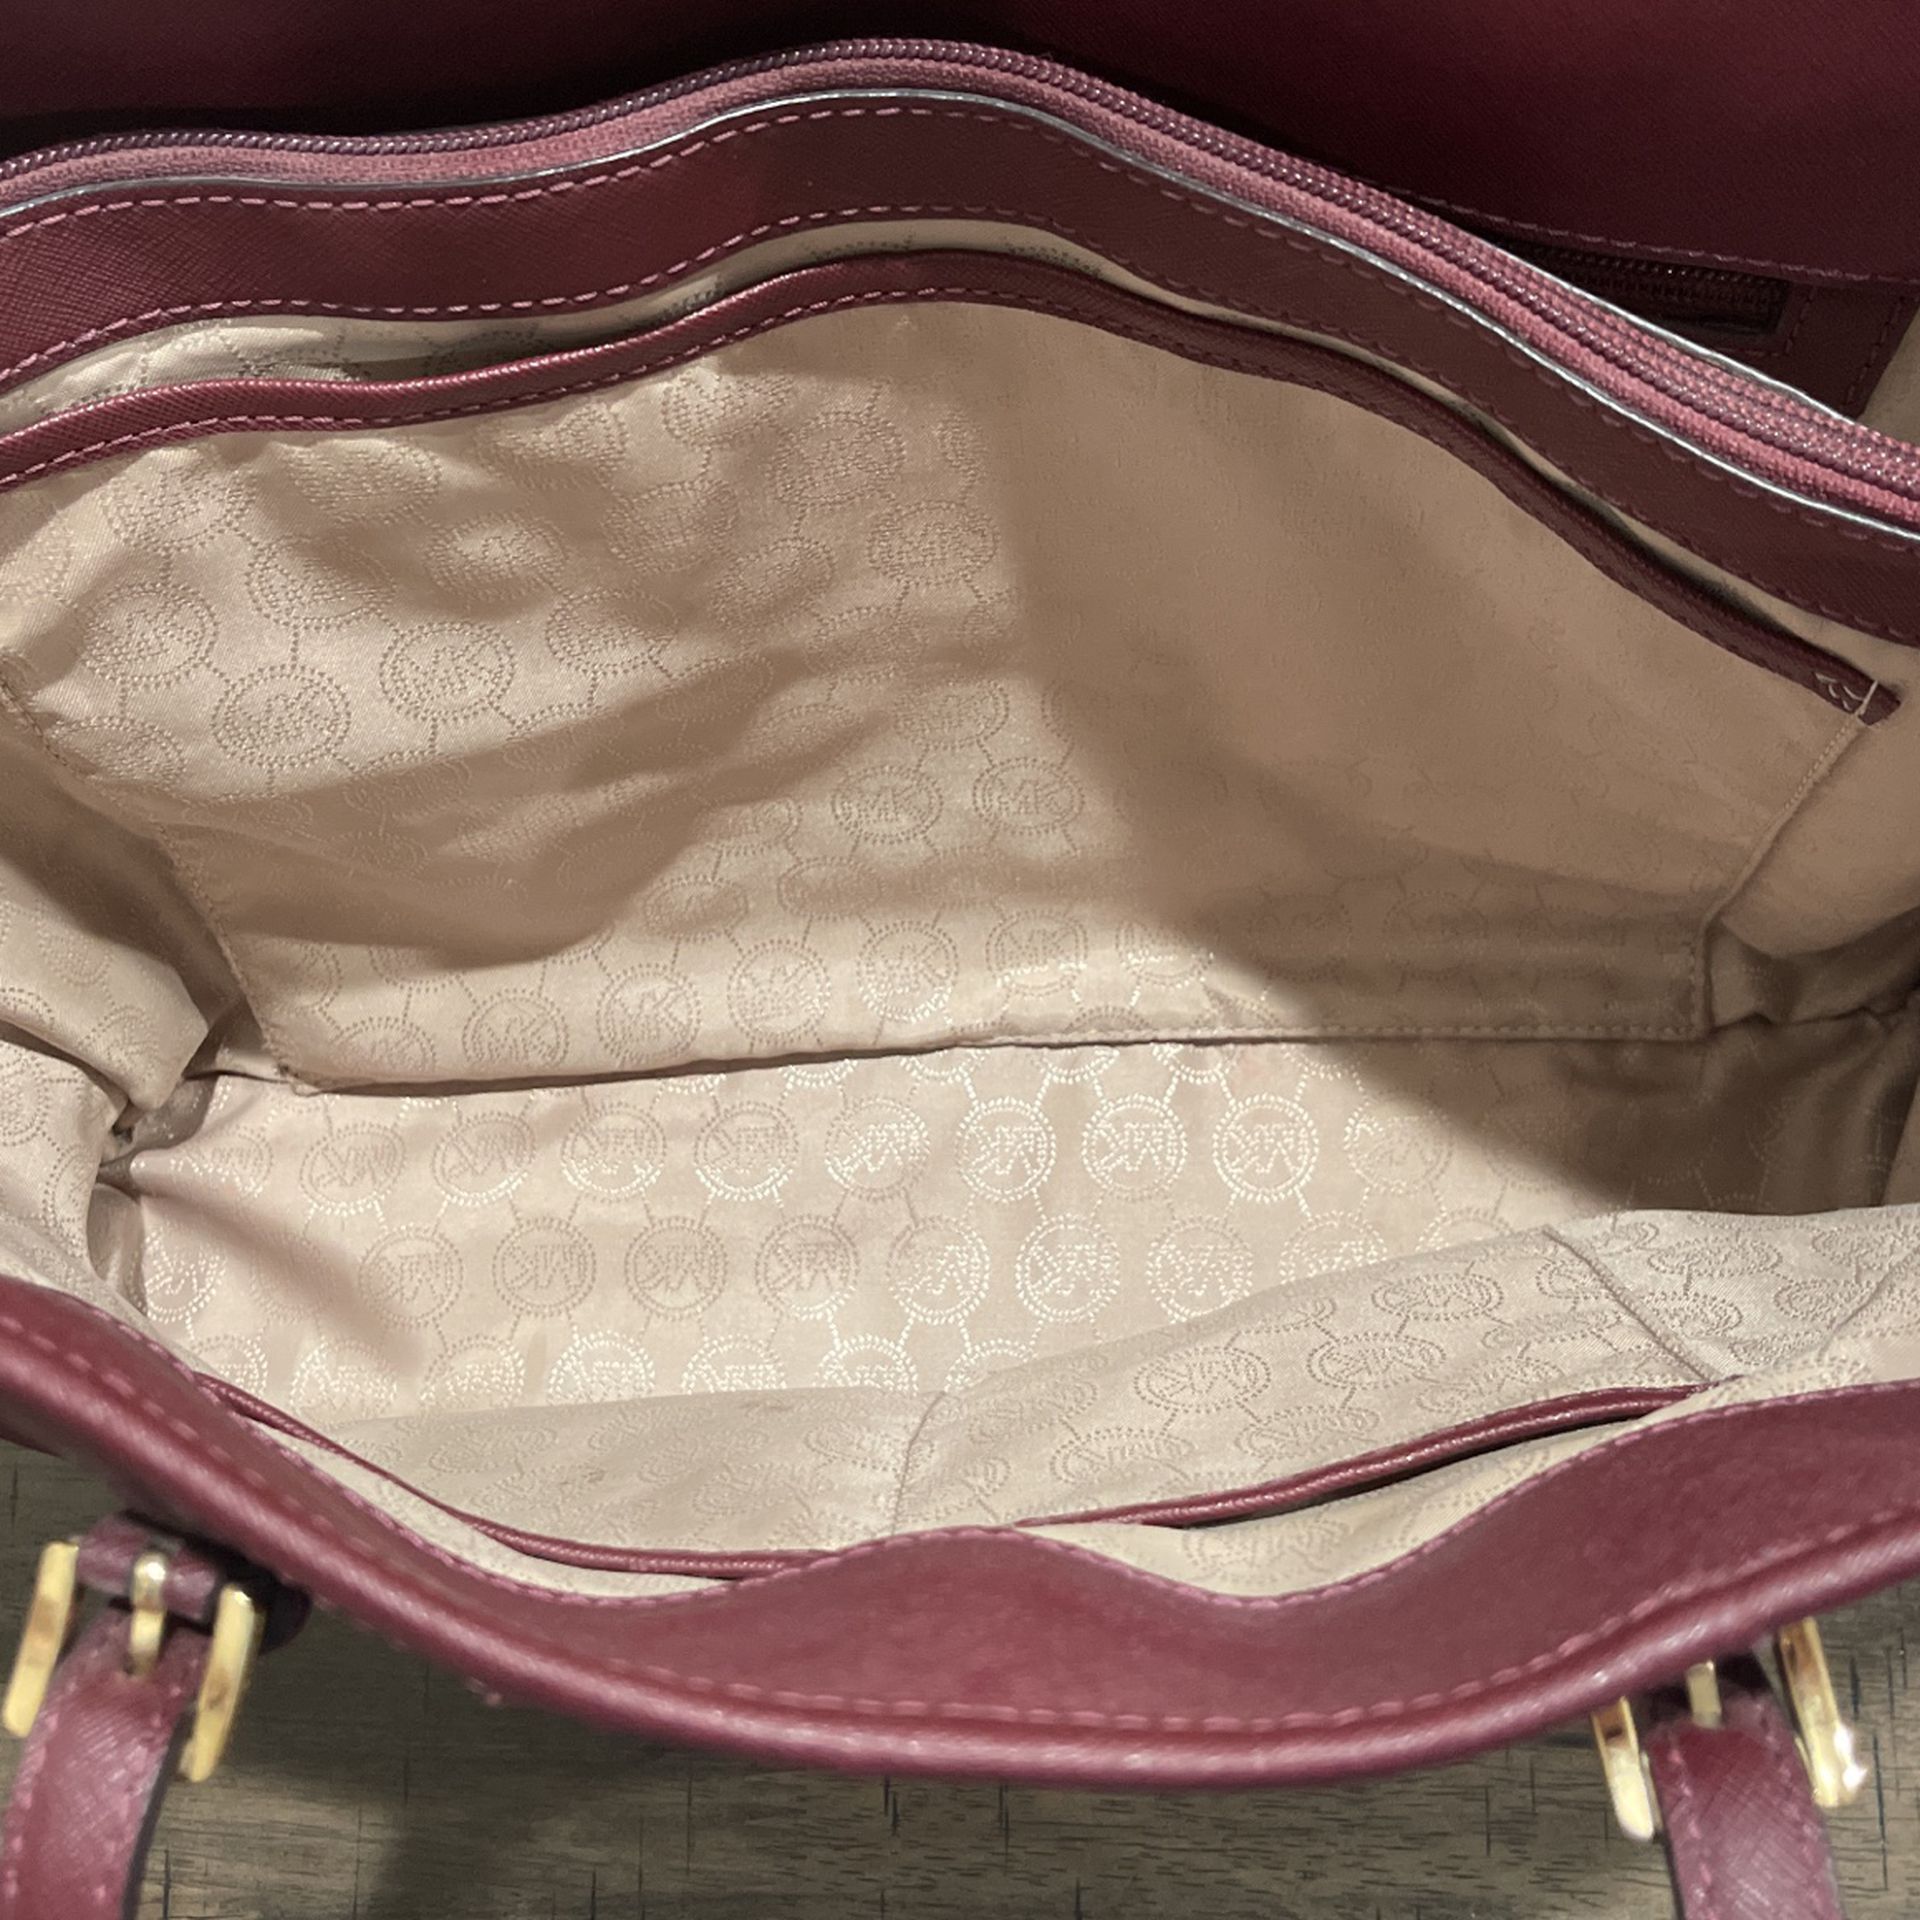 Michael Kors Sullivan Tote Bag for Sale in Chula Vista, CA - OfferUp